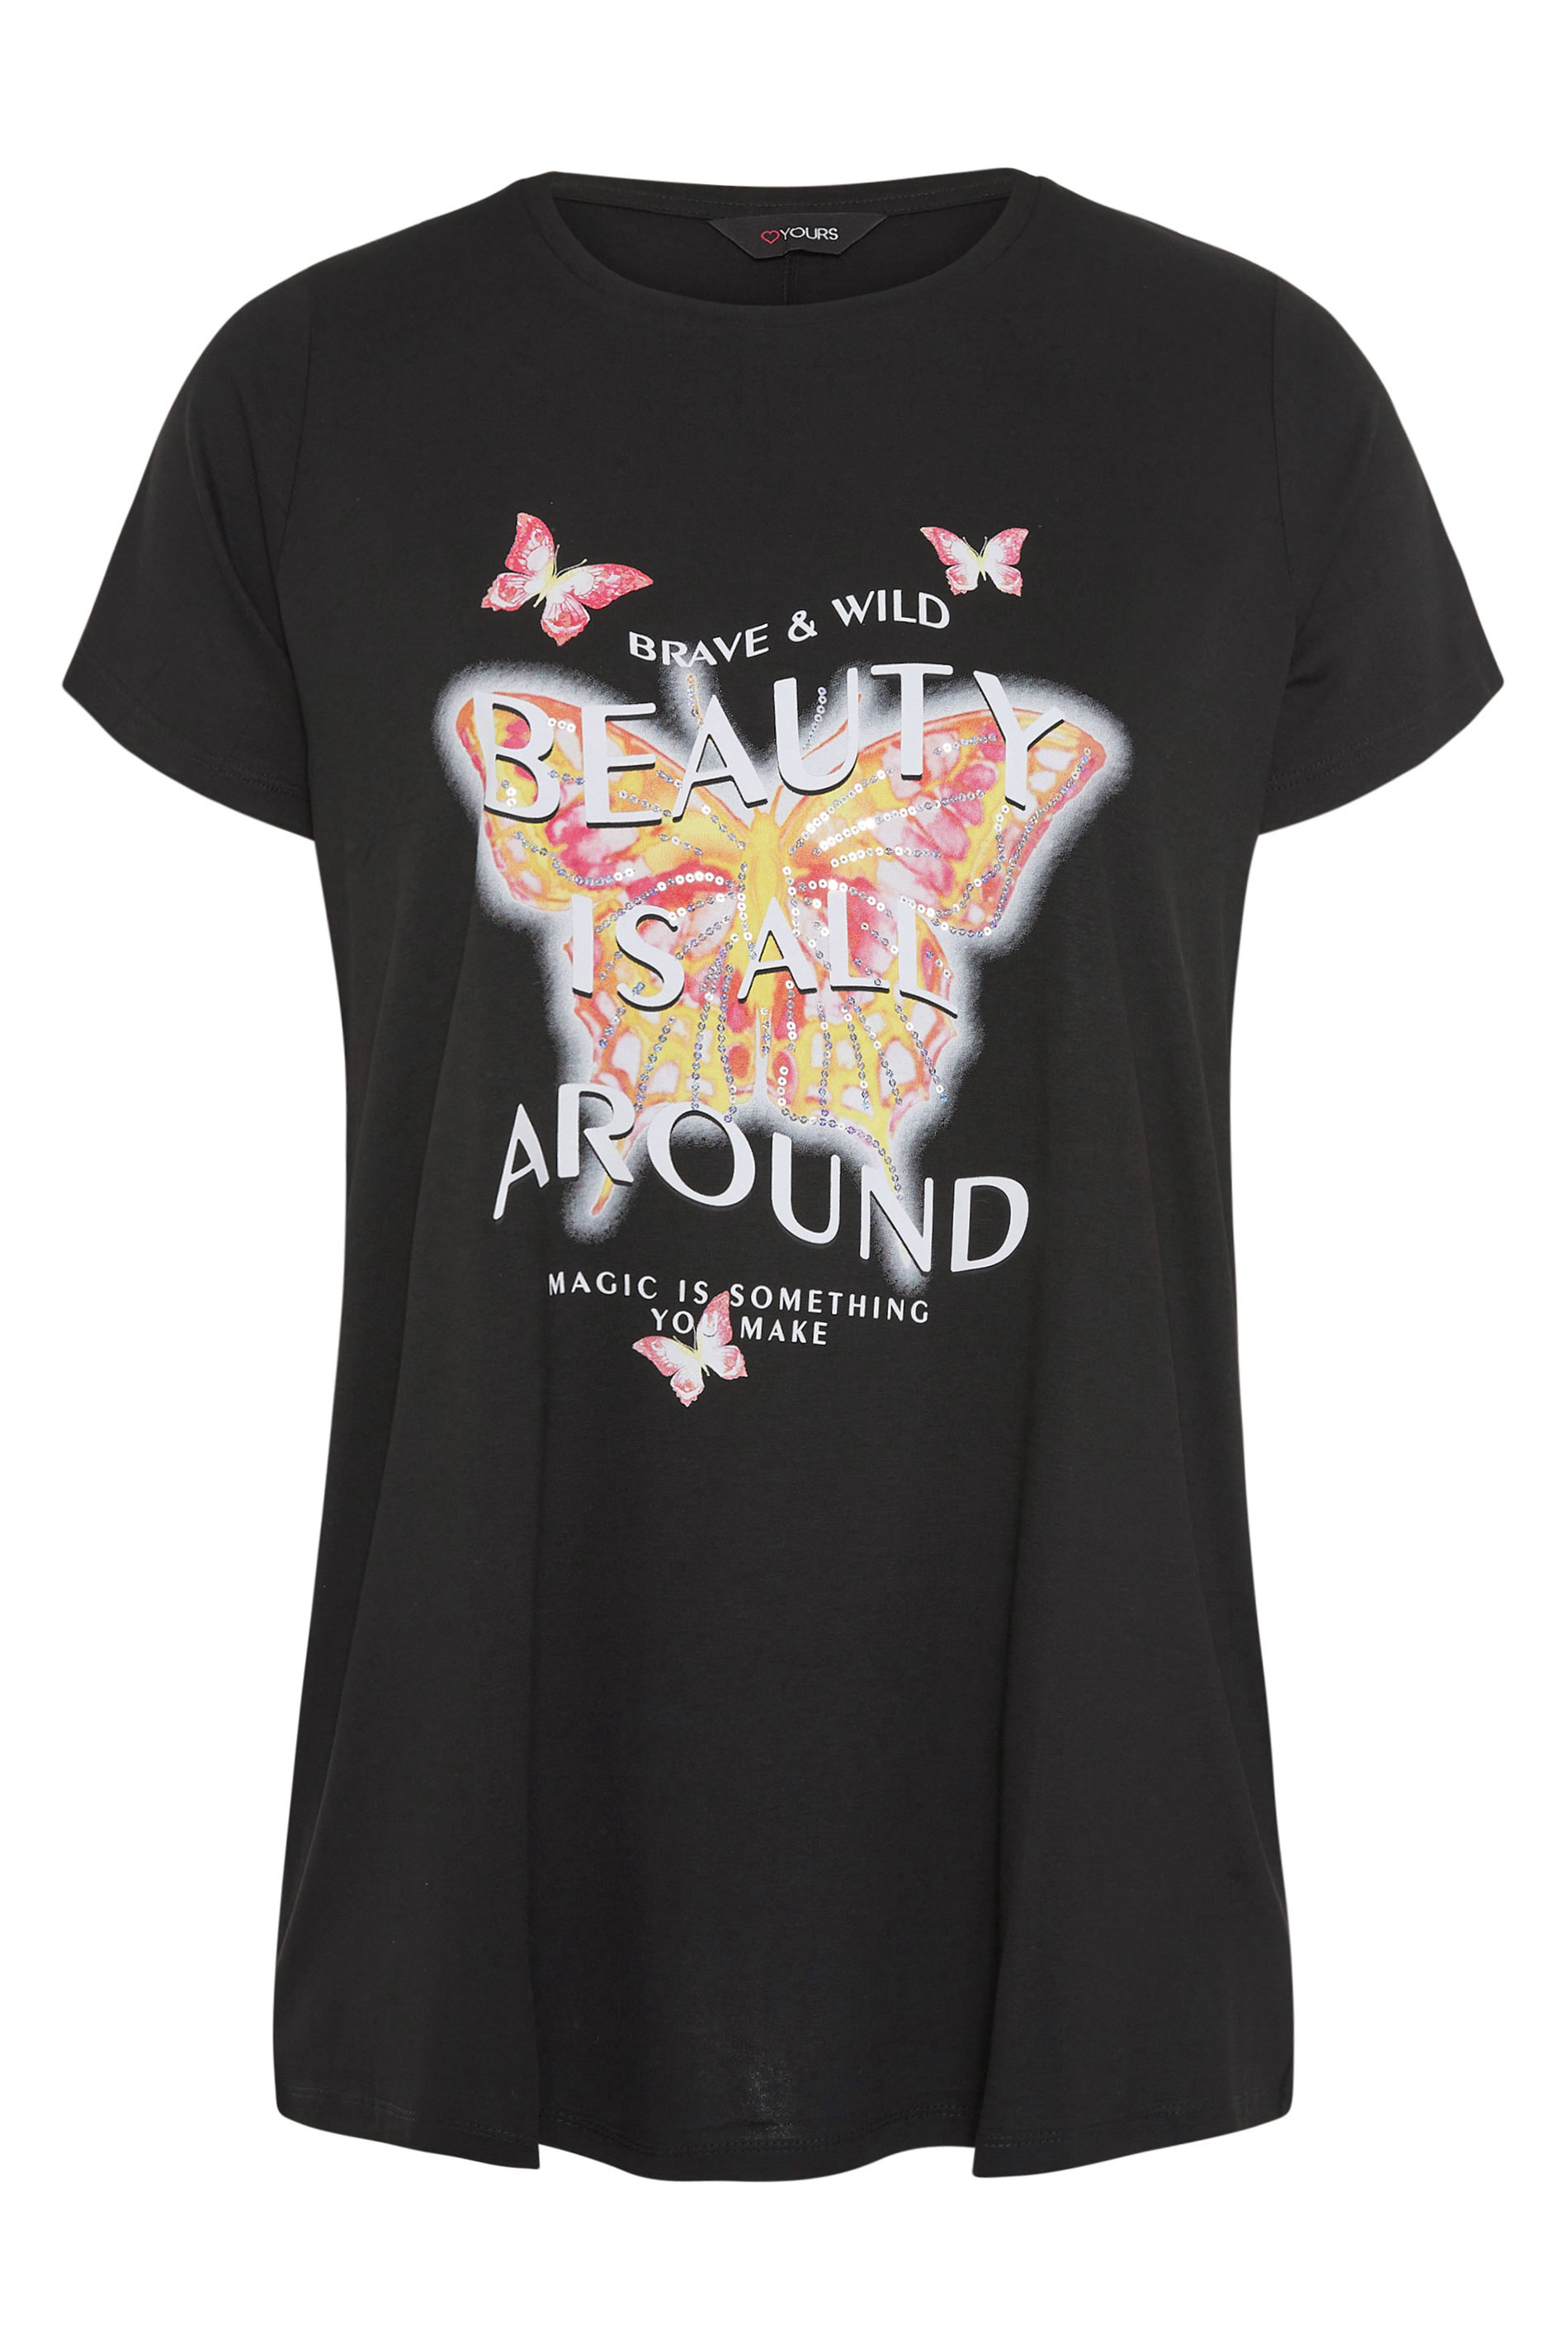 Grande taille  Tops Grande taille  Tops Casual | T-Shirt Noir Imprimé 'Beauty' - YW21552